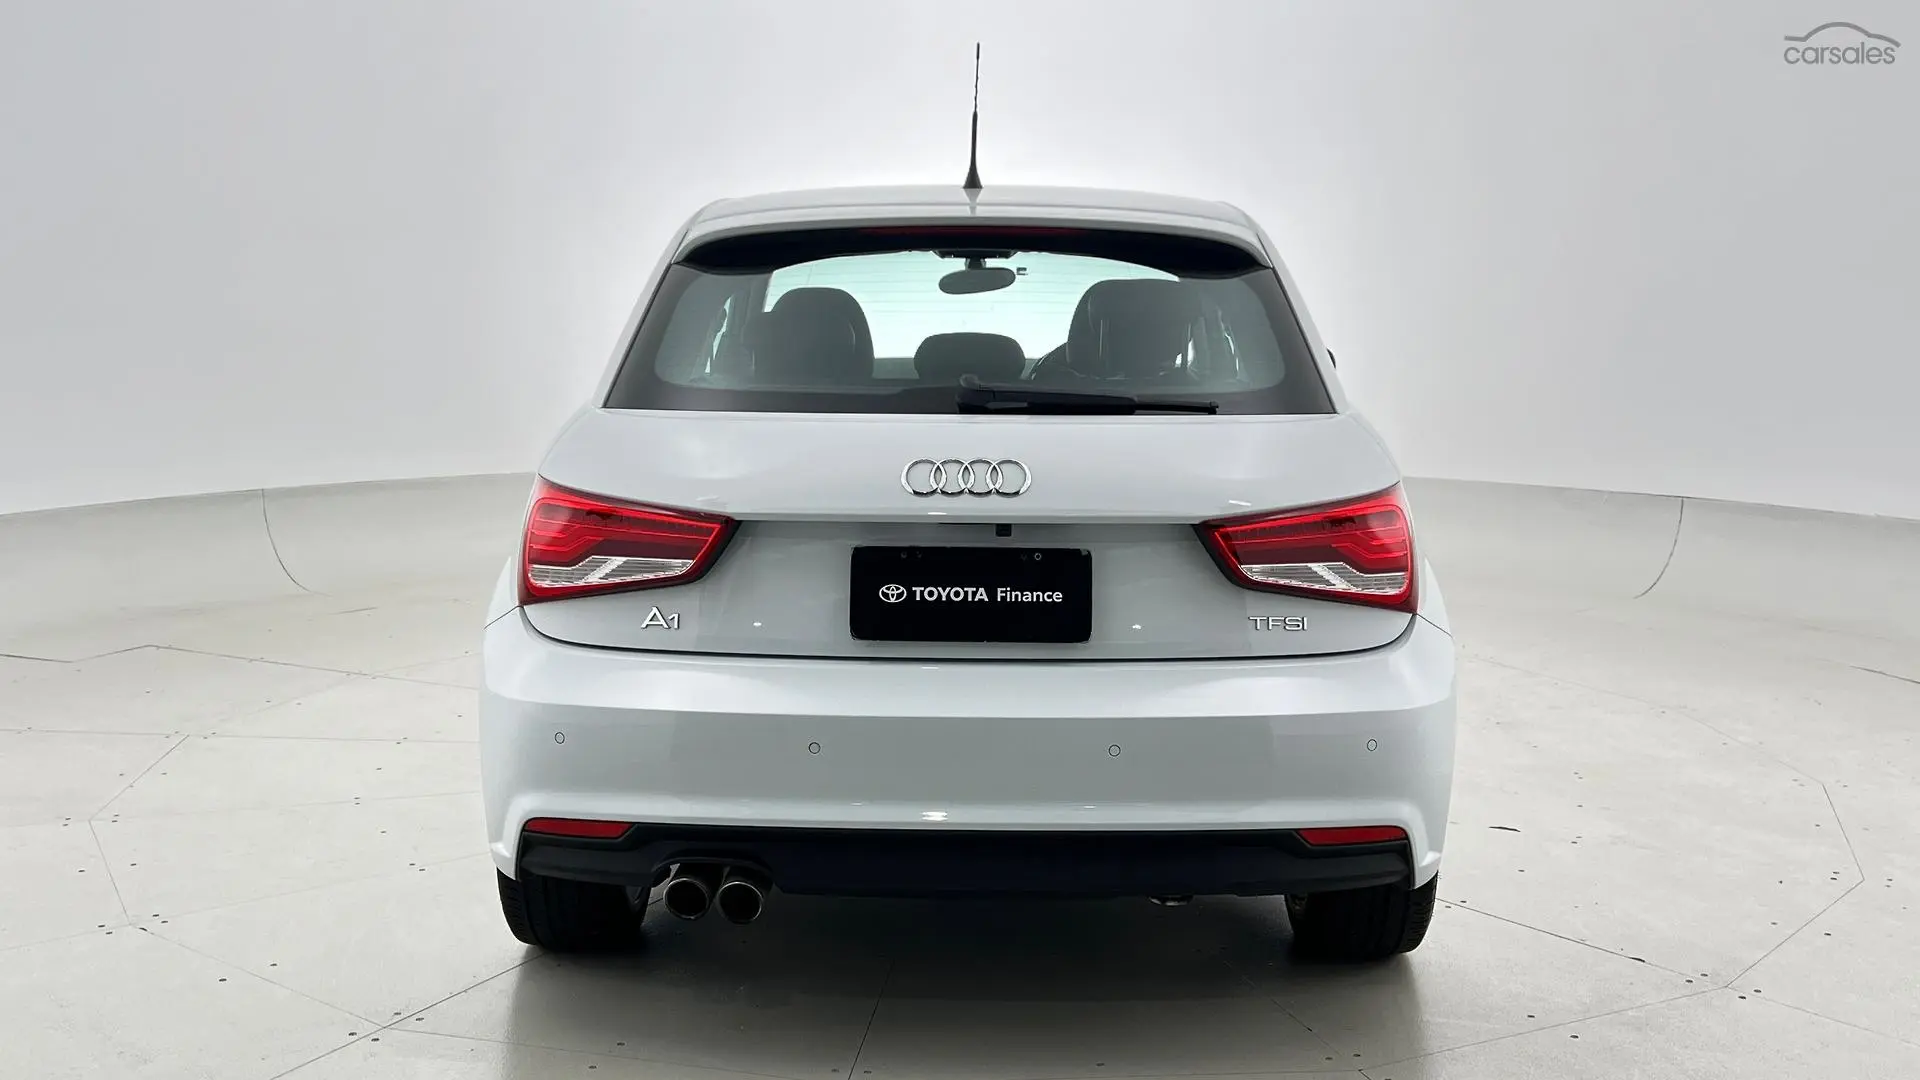 2017 Audi A1 Image 6